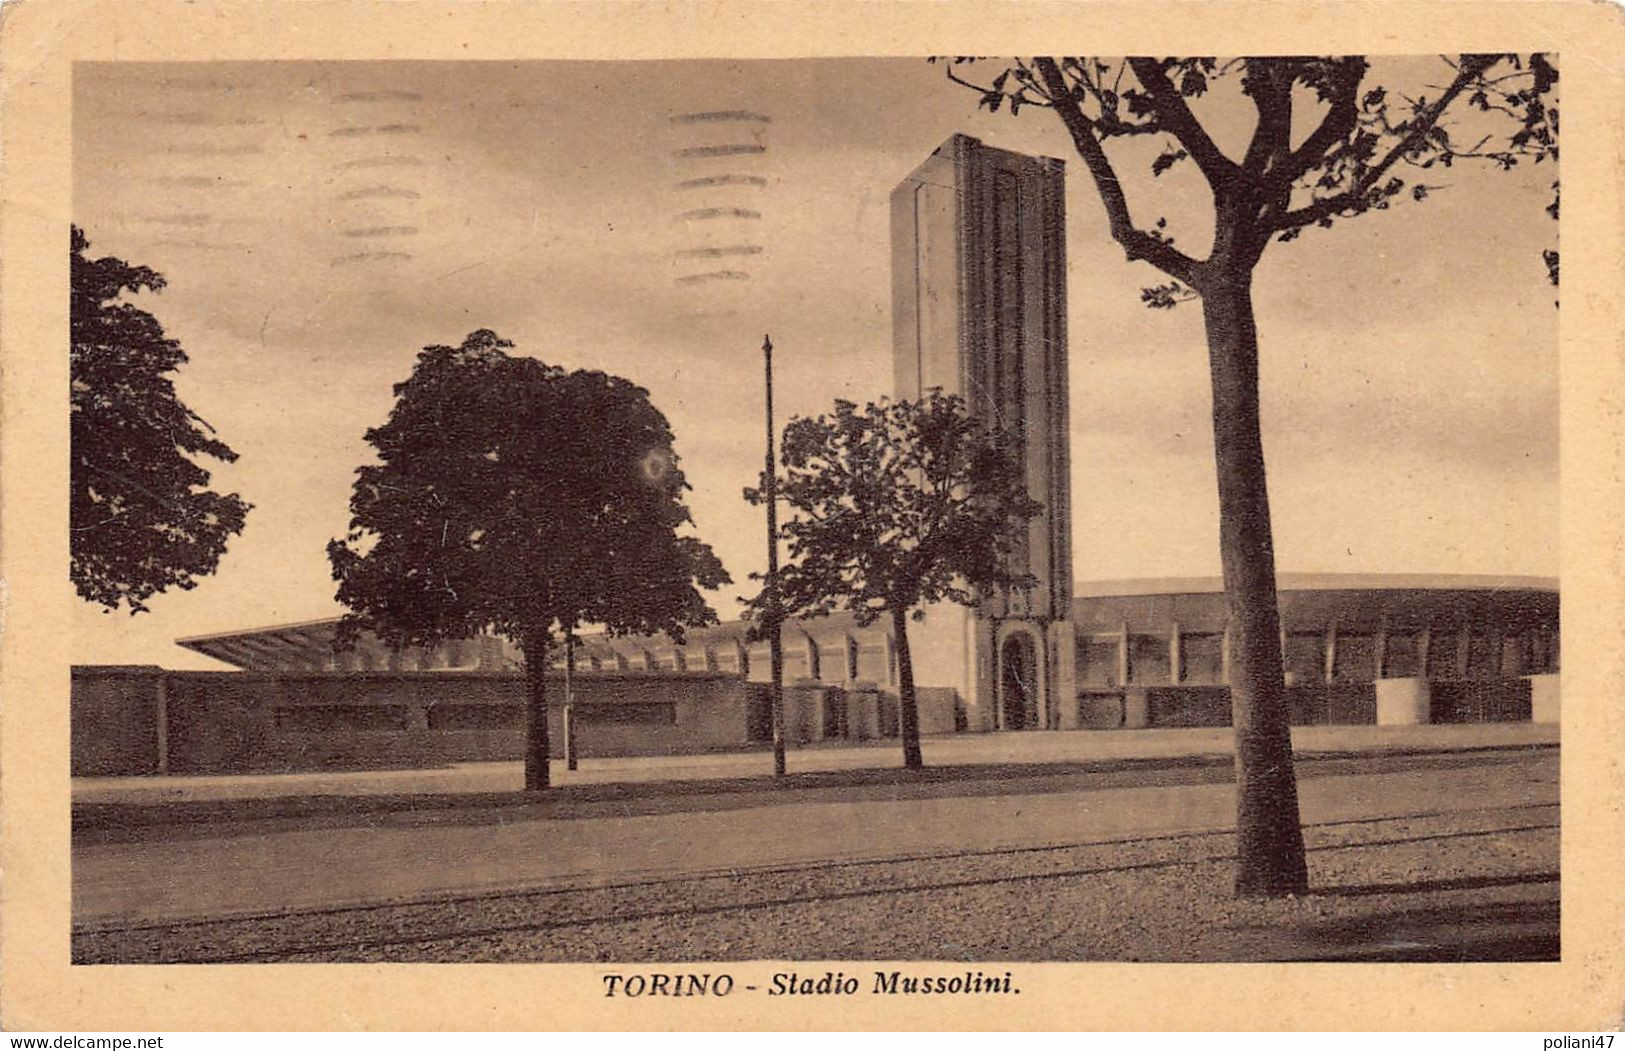 00326 "TORINO - STADIO MUSSOLINI" VEDUTA, ARCHIT. '900. CART SPED 1941 - Stadi & Strutture Sportive